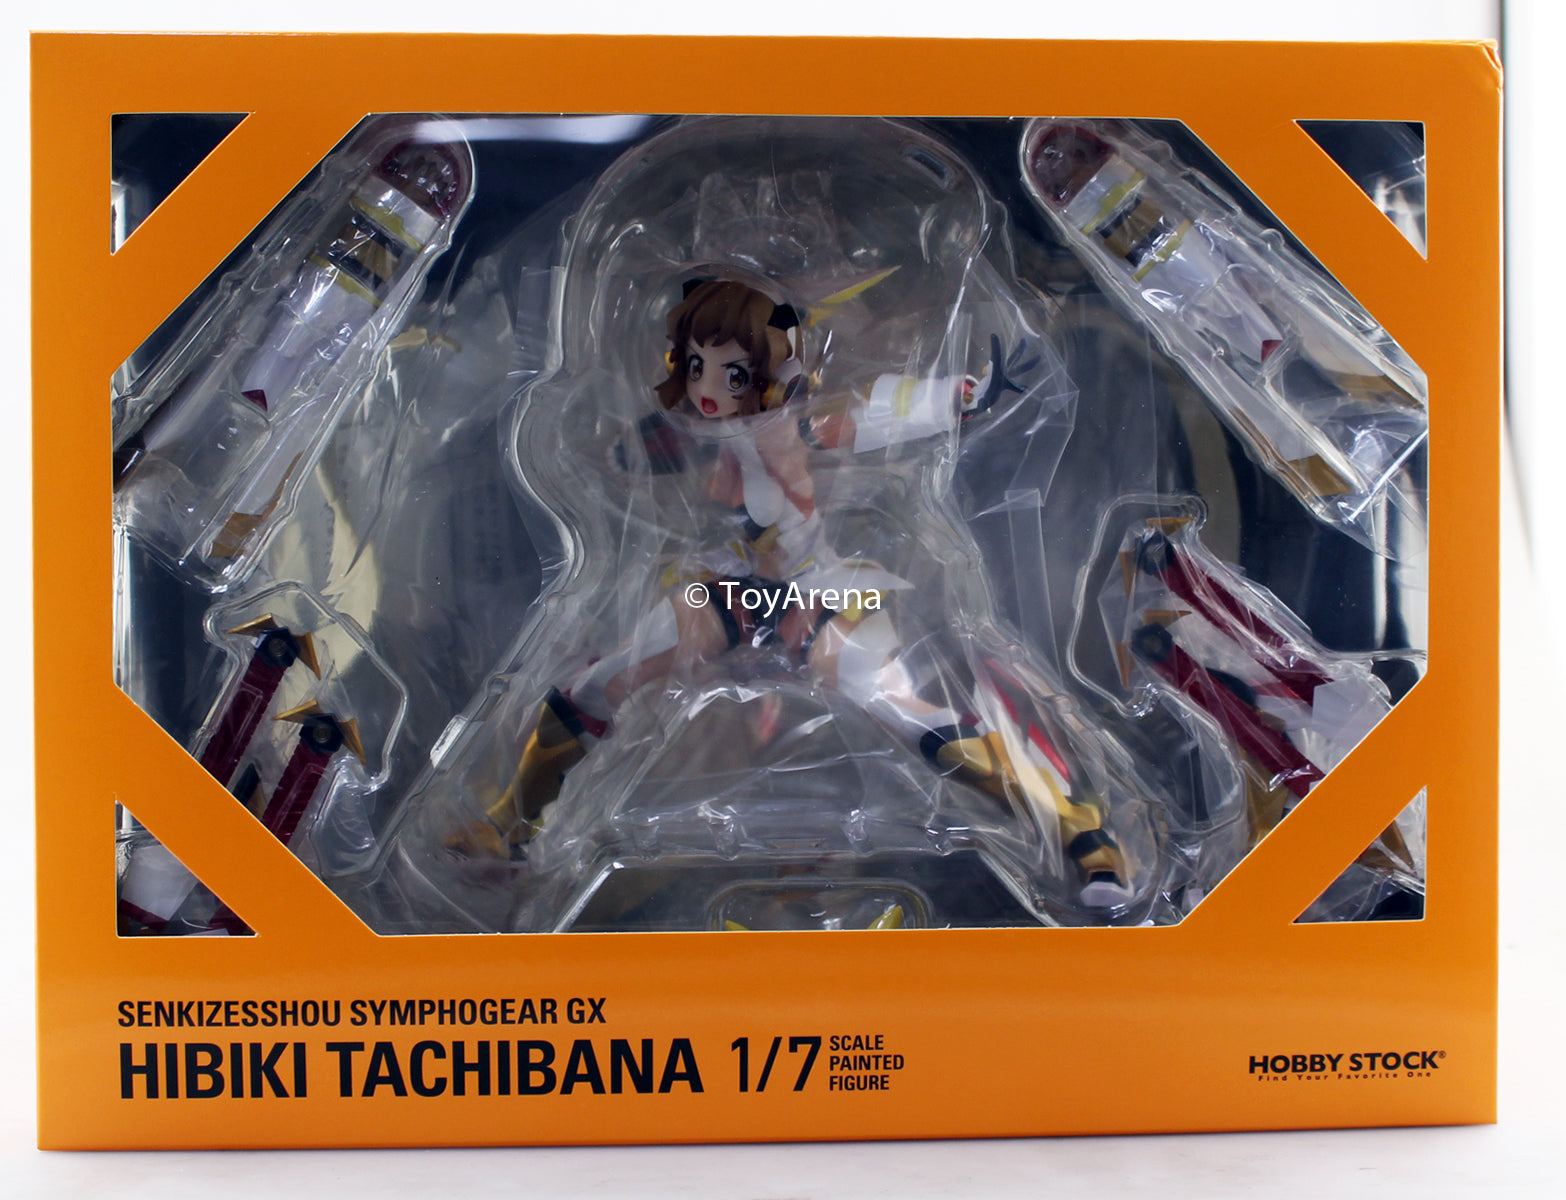 Hobby Stock 1/7 Senki Zesshou Symphogear GX Tachibana Hibiki Scale Statue Figure PVC